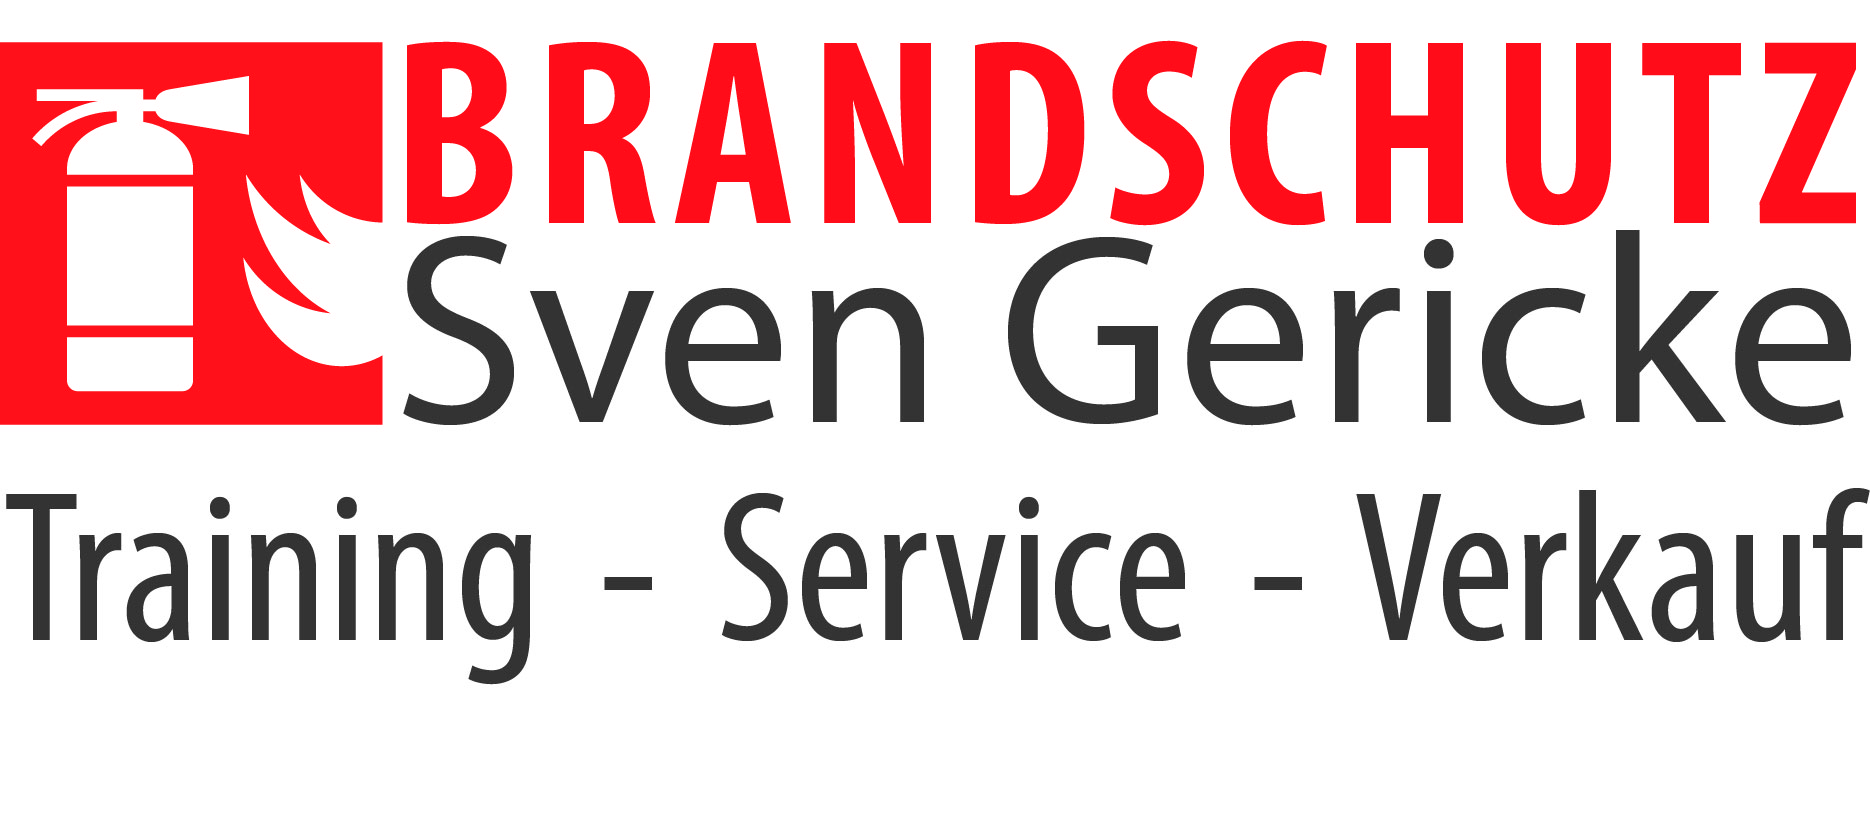 logo brandschutz sven